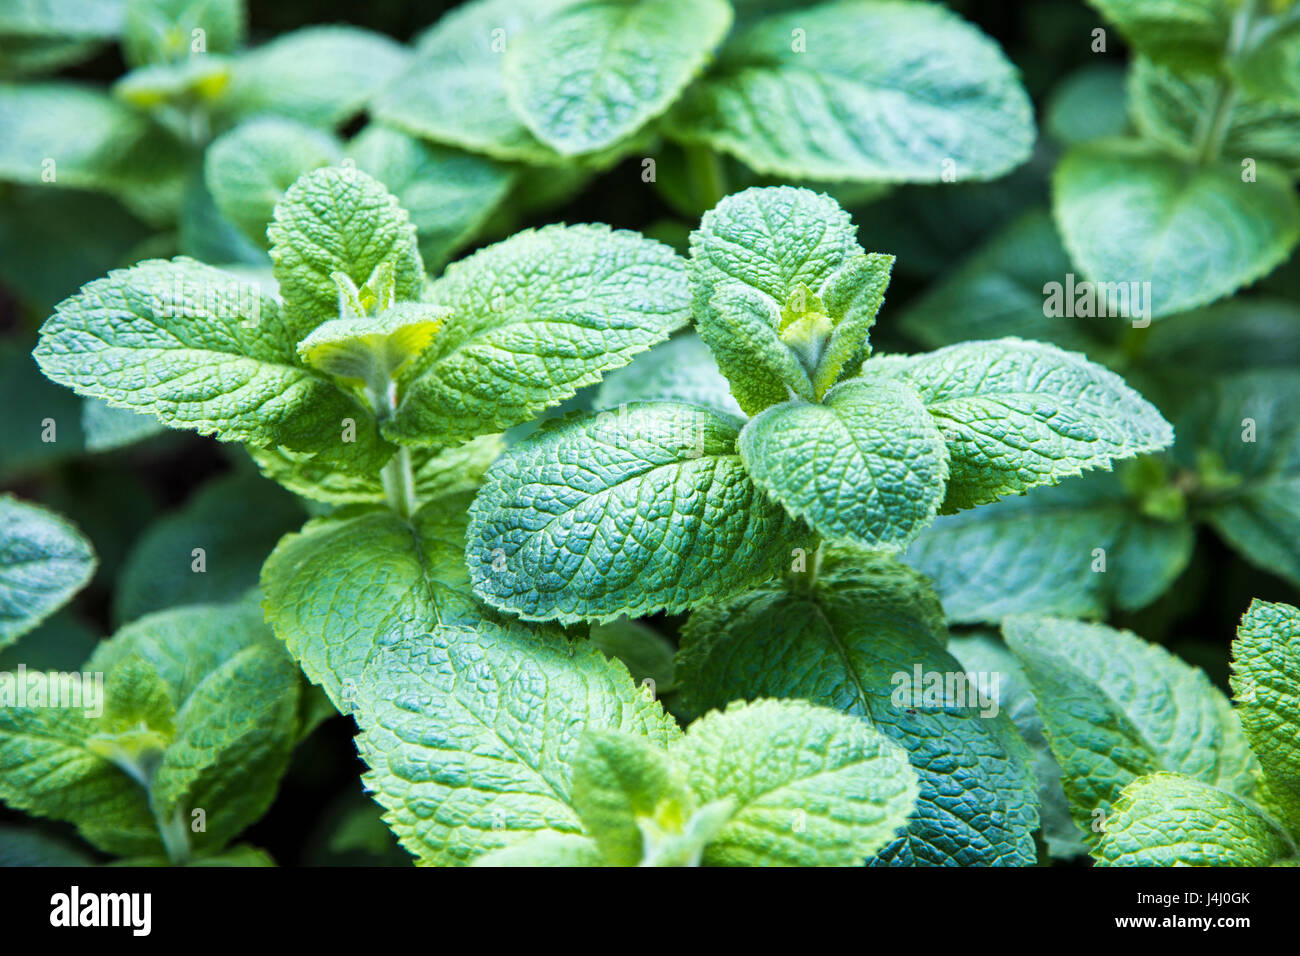 Apple Mint (Mentha suaveolens) plant Stock Photo